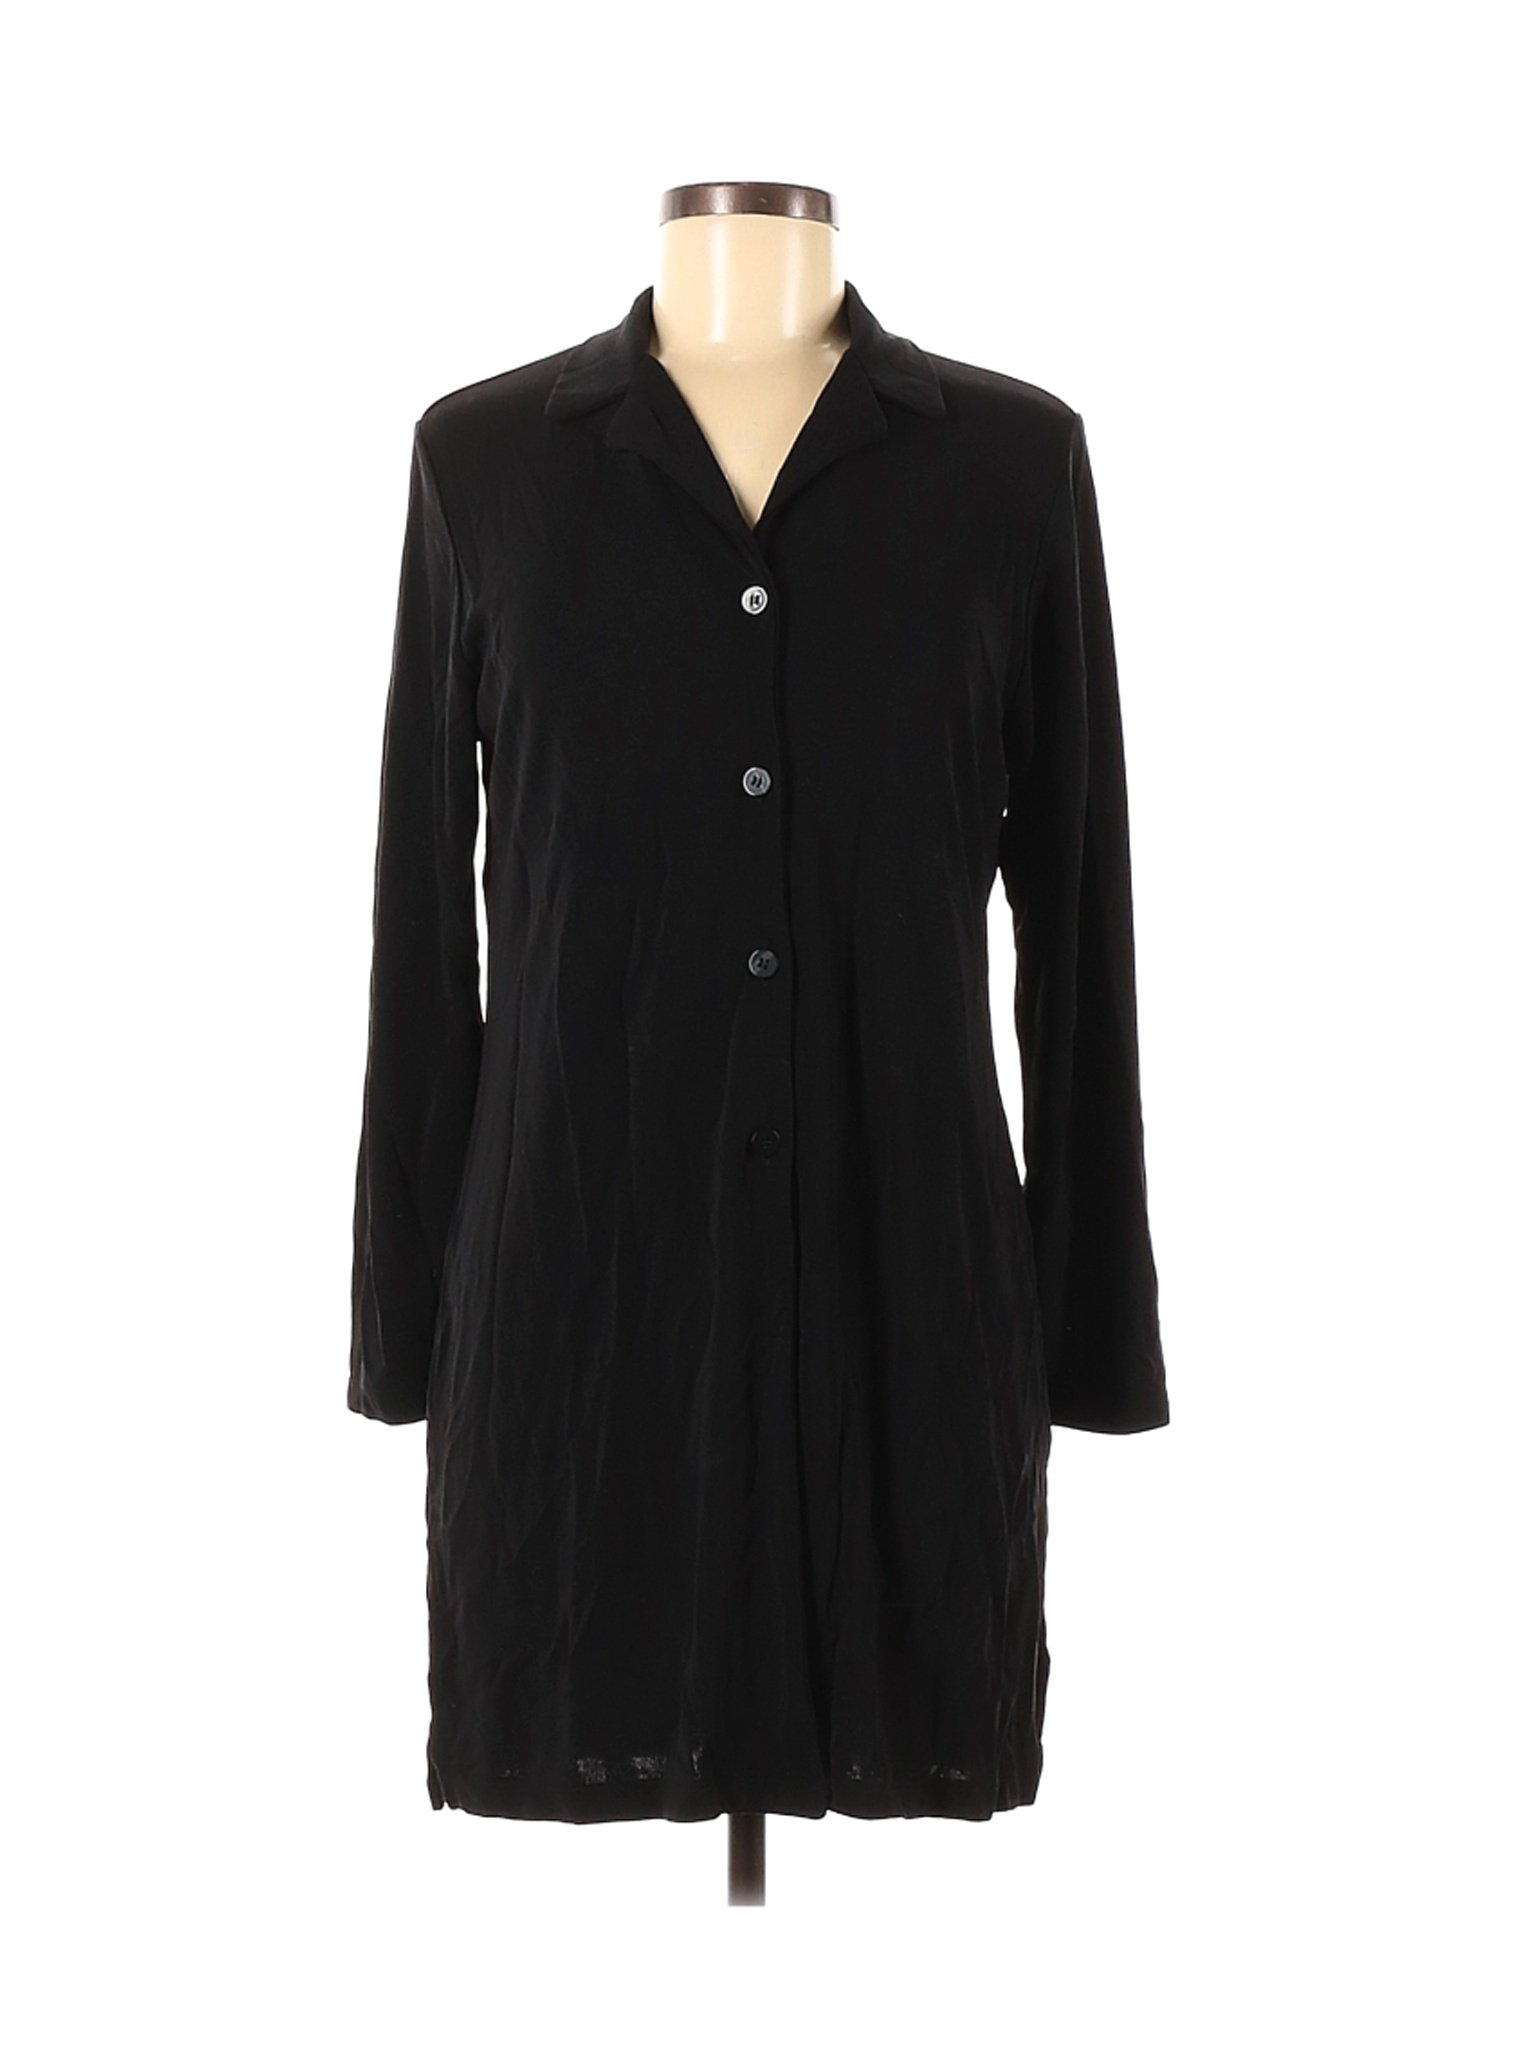 Apostrophe Women Black Casual Dress M | eBay